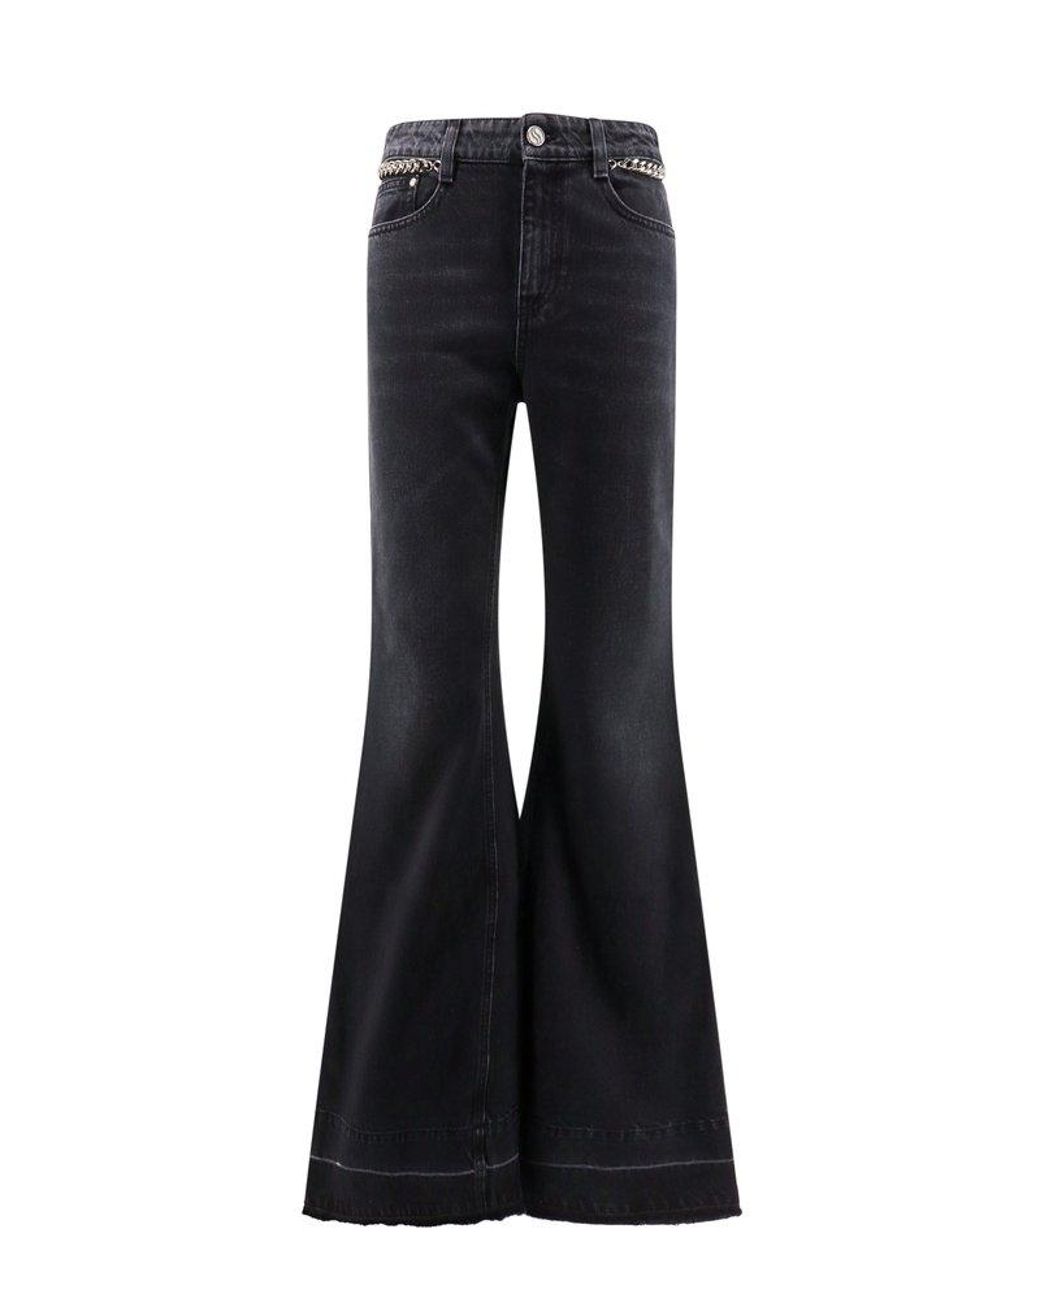 Stella McCartney Chain Embellished Flared Jeans in Black | Lyst